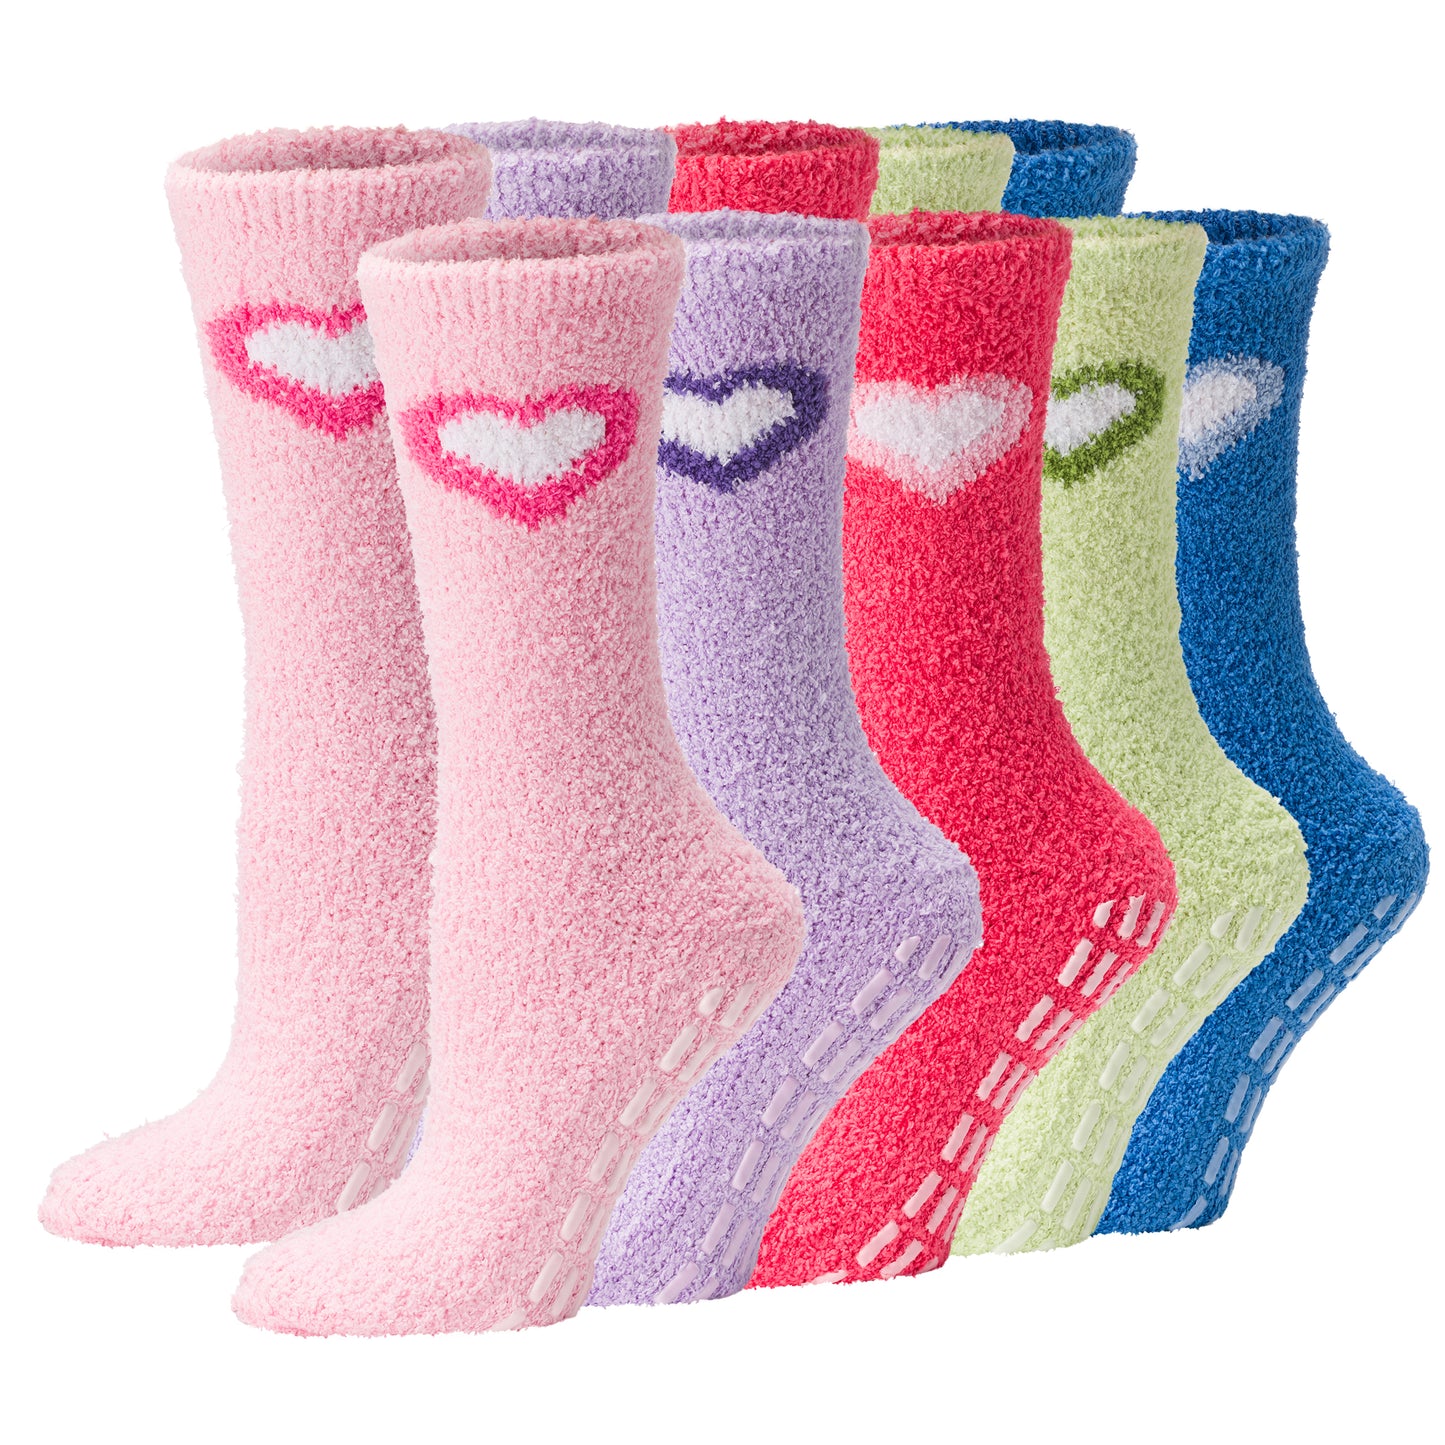 Fuzzy Womens Socks - 5 Pairs